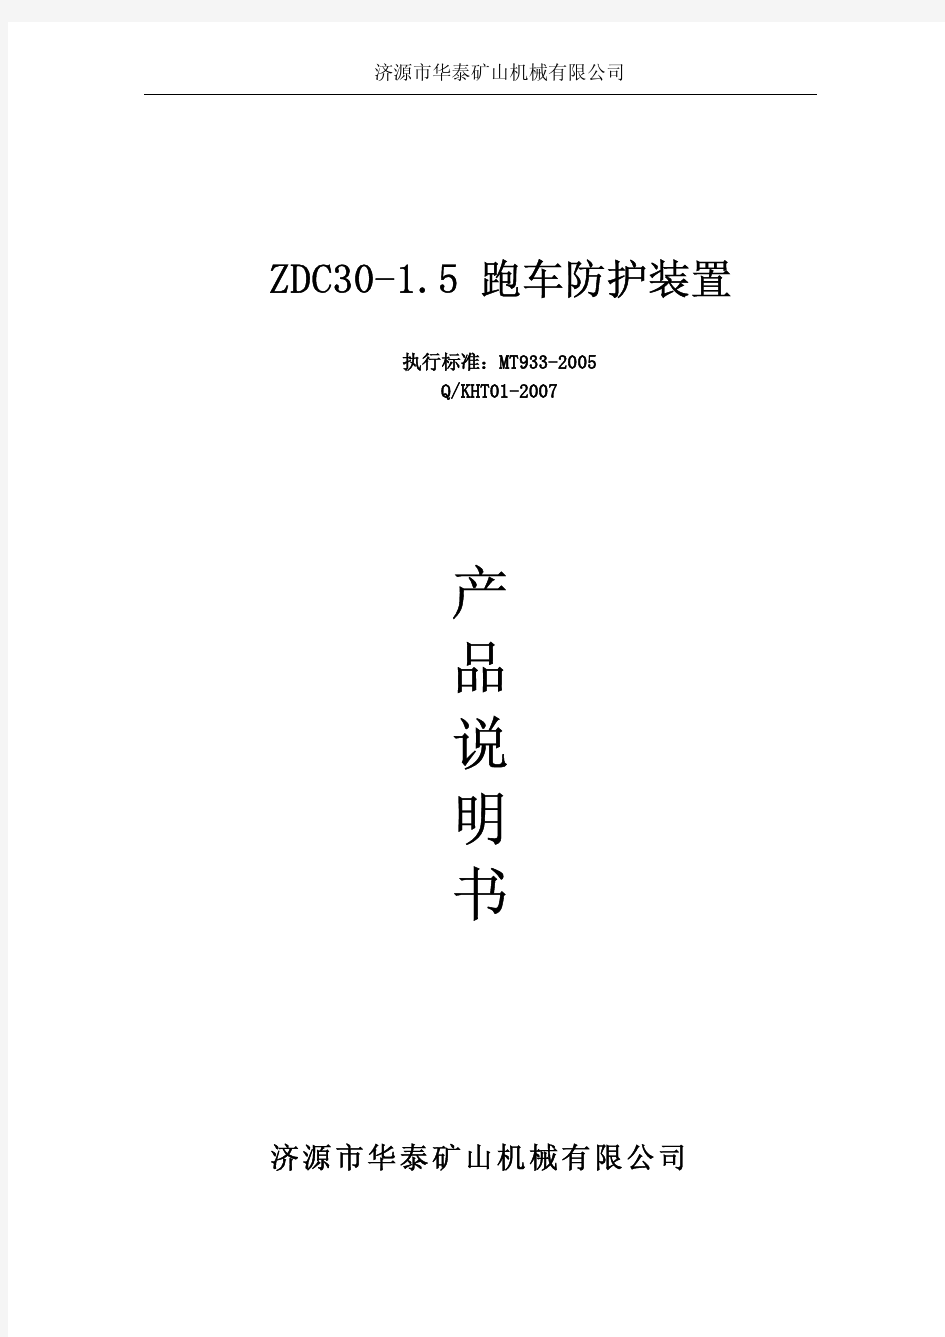 ZDC30-1.5 跑车防护装置说明书